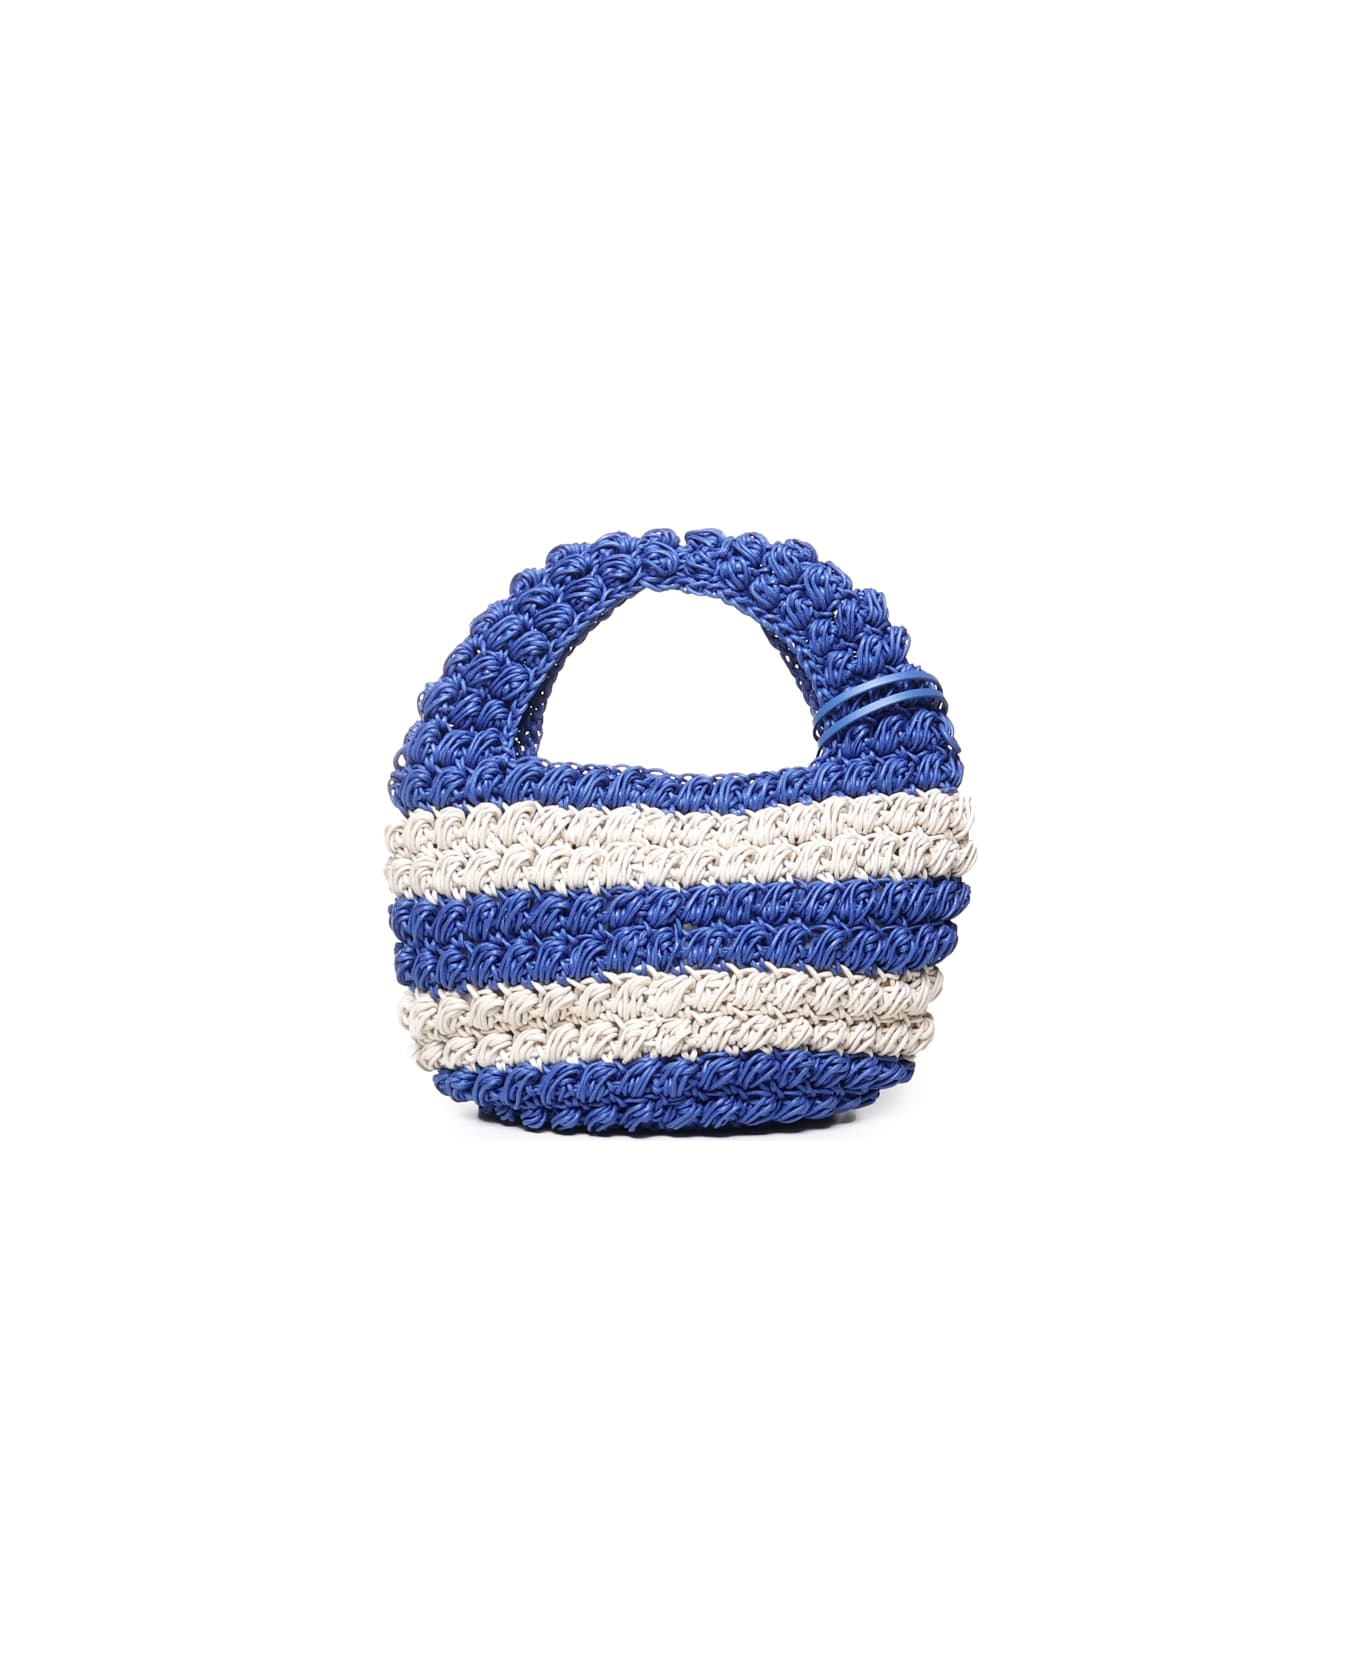 J.W. Anderson Popcorn Basket Handbag - Blue, white